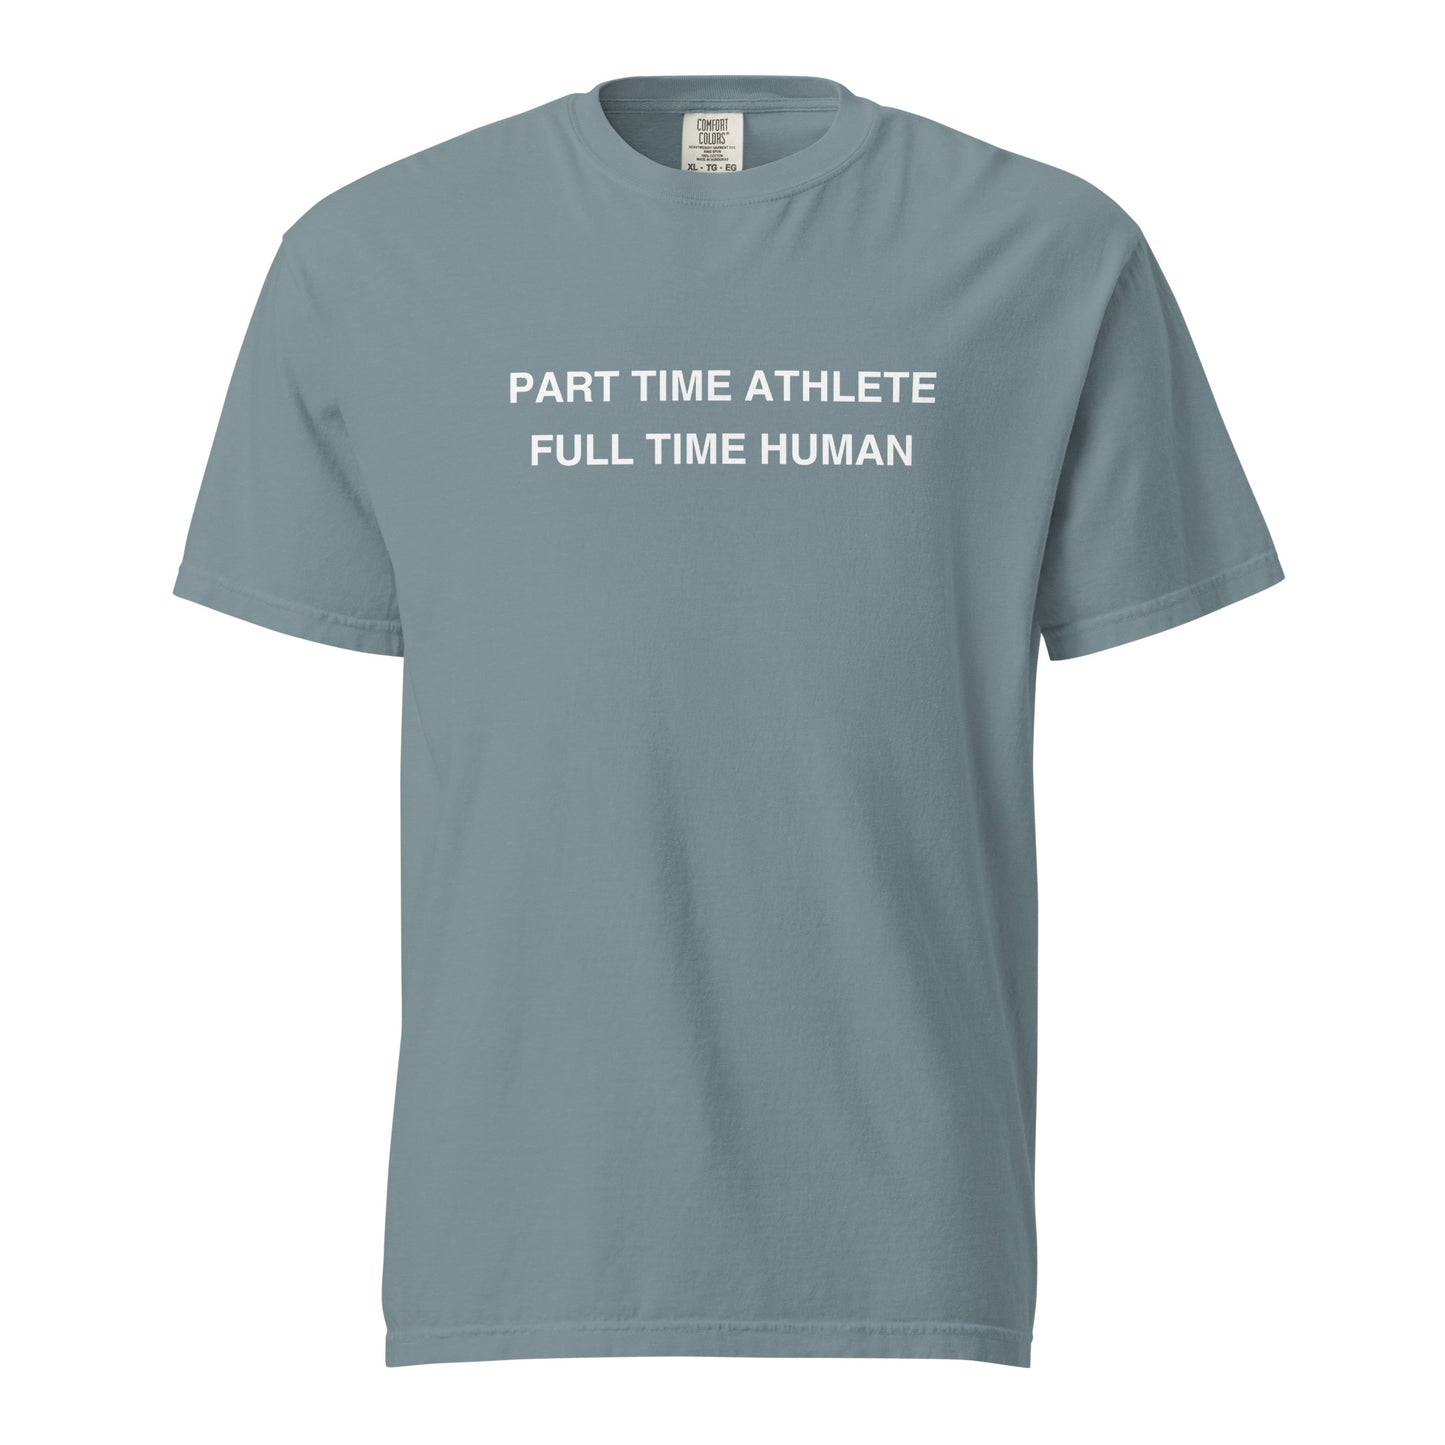 Part Time Athlete Full Time Human - White